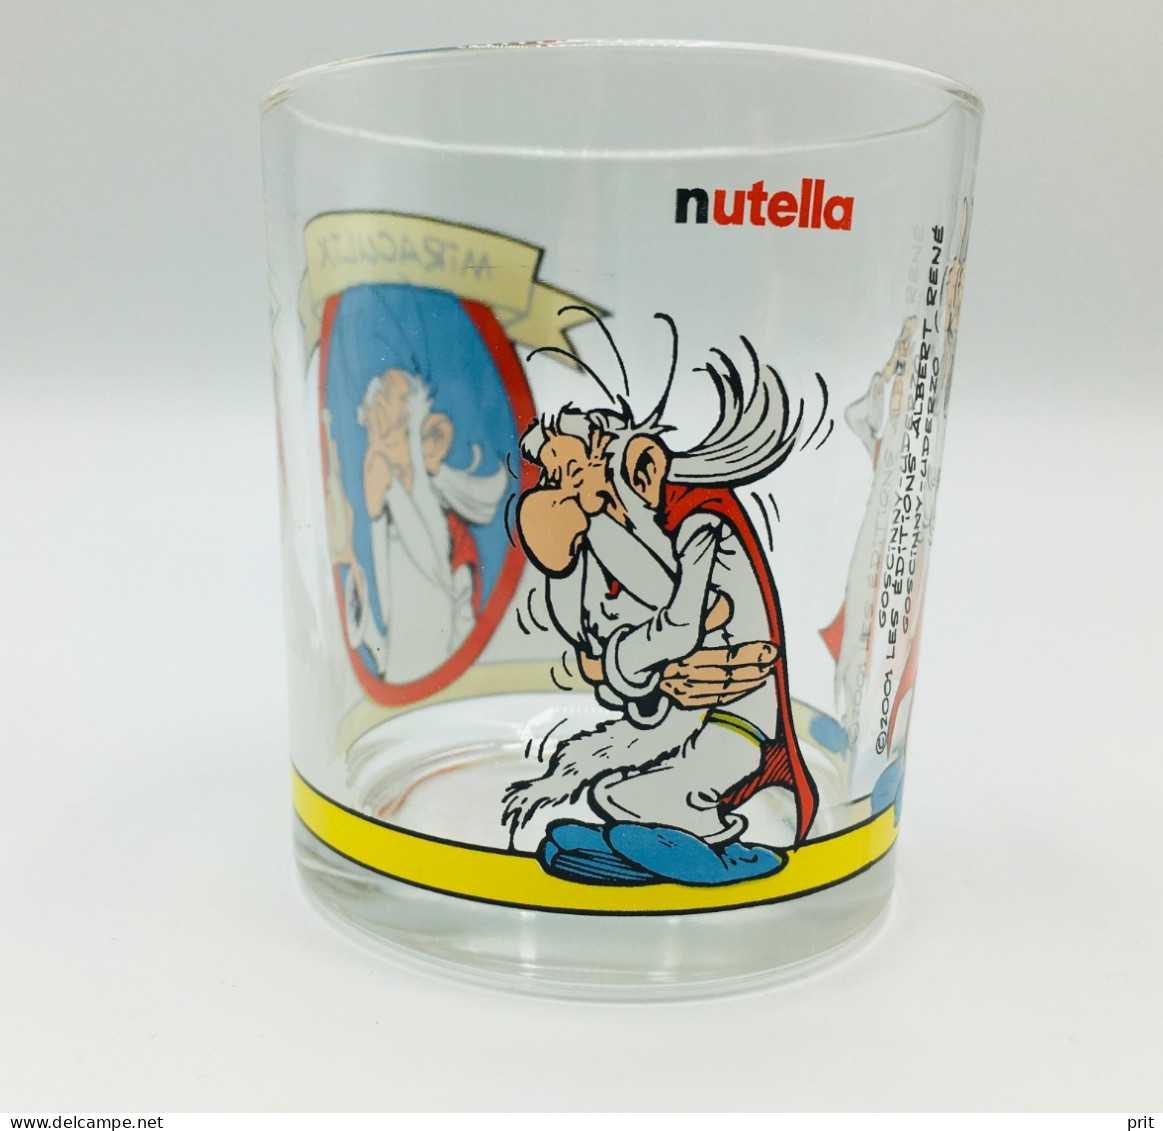 Miraculix Asterix Nutella Limited Edition Glass Jar 2001 Les éditions Albert René Goscinny-Uderzo - Nutella